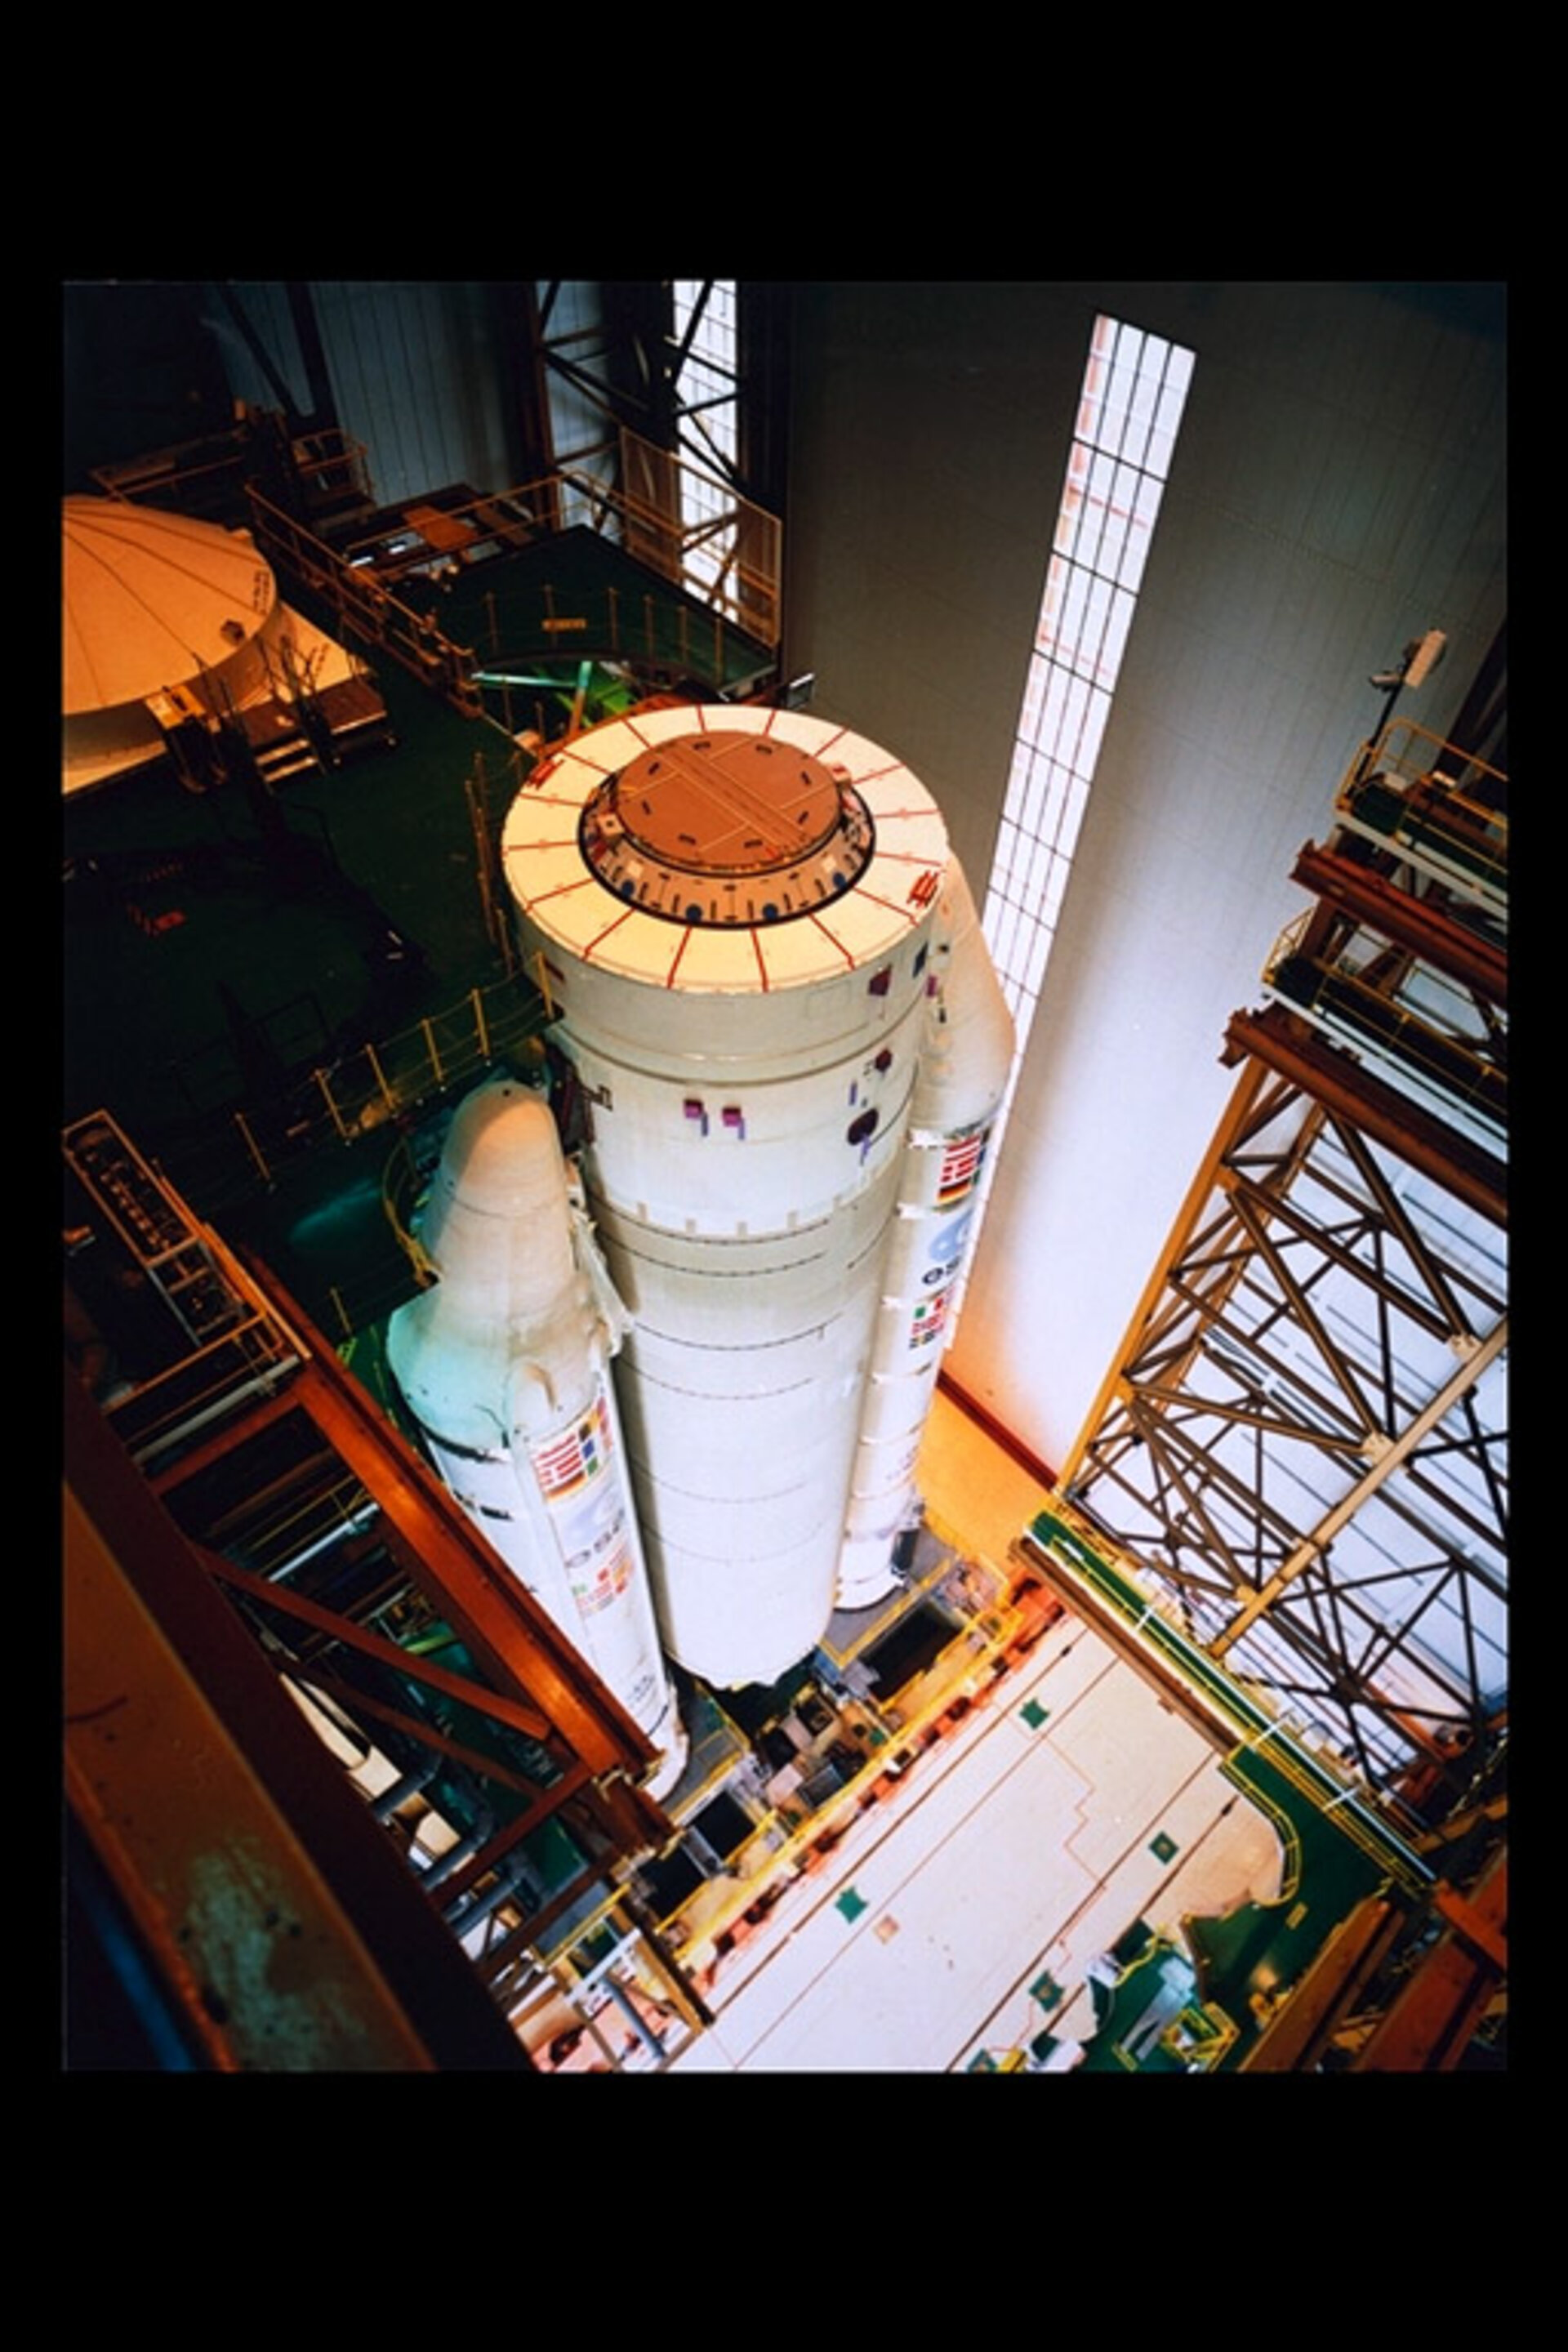 Ariane-501 assembly at Kourou